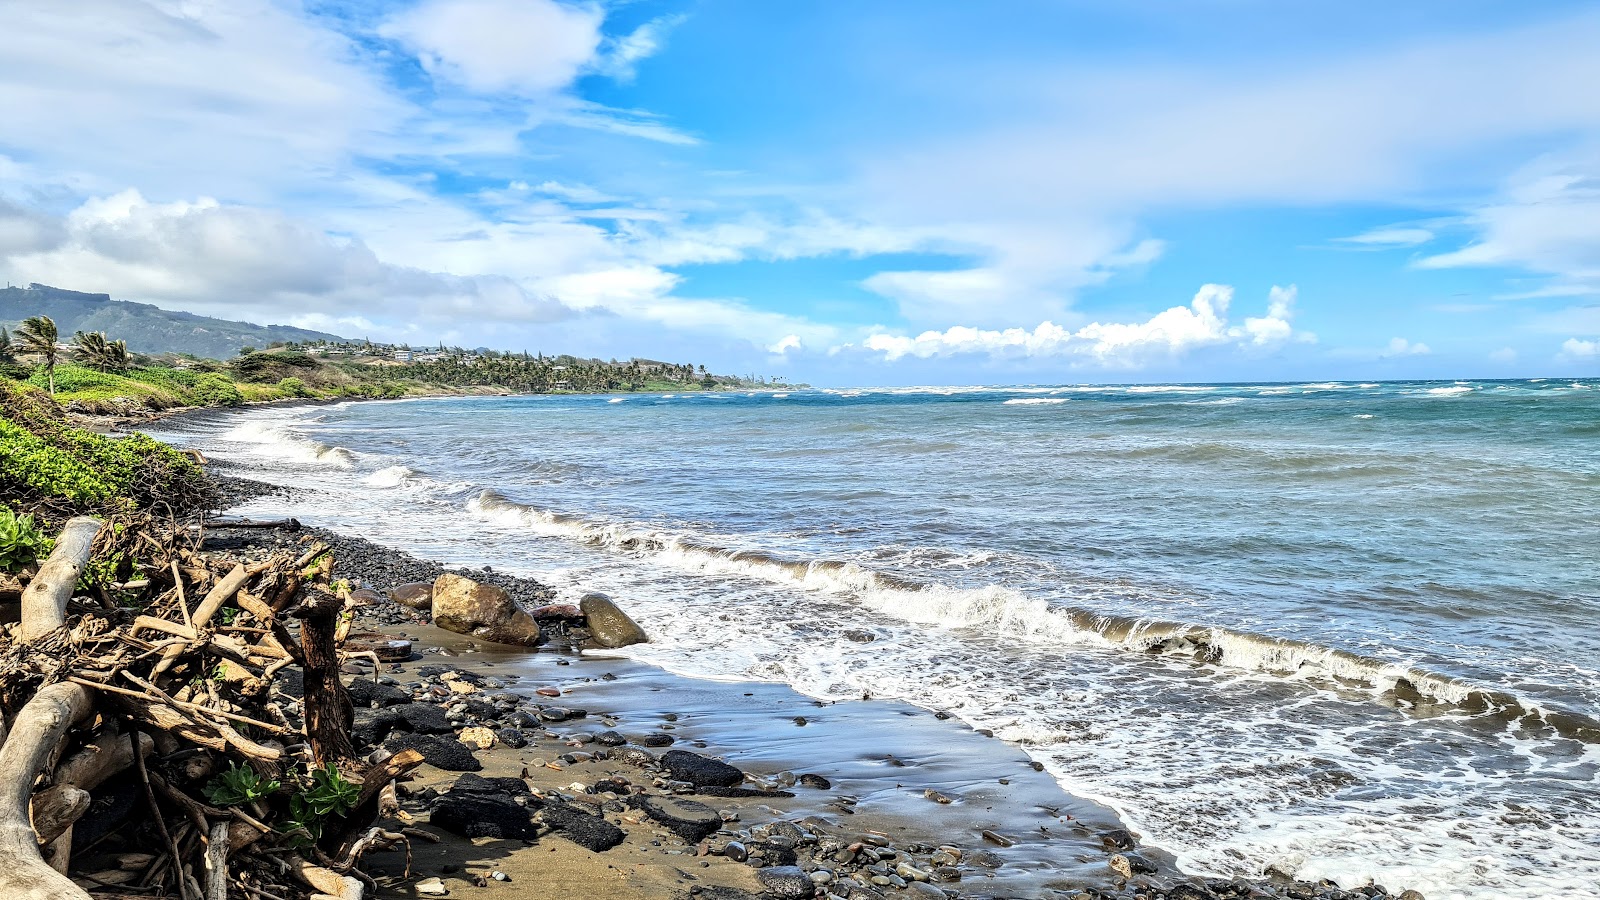 Fotografija Paukukalo Beach z sivi kamenček površino